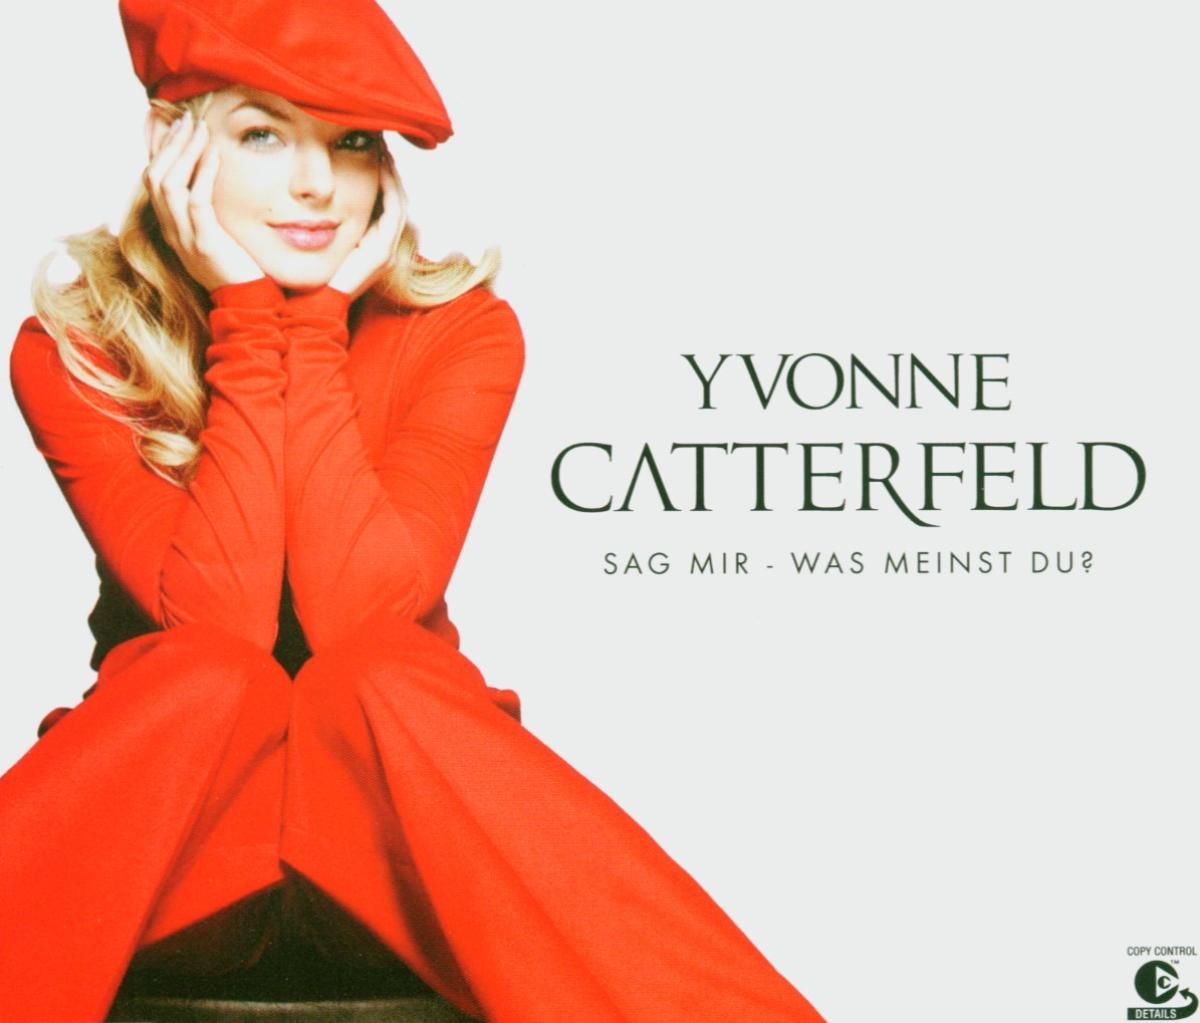 Yvonne Catterfeld Sag mir - was meinst du? cover artwork